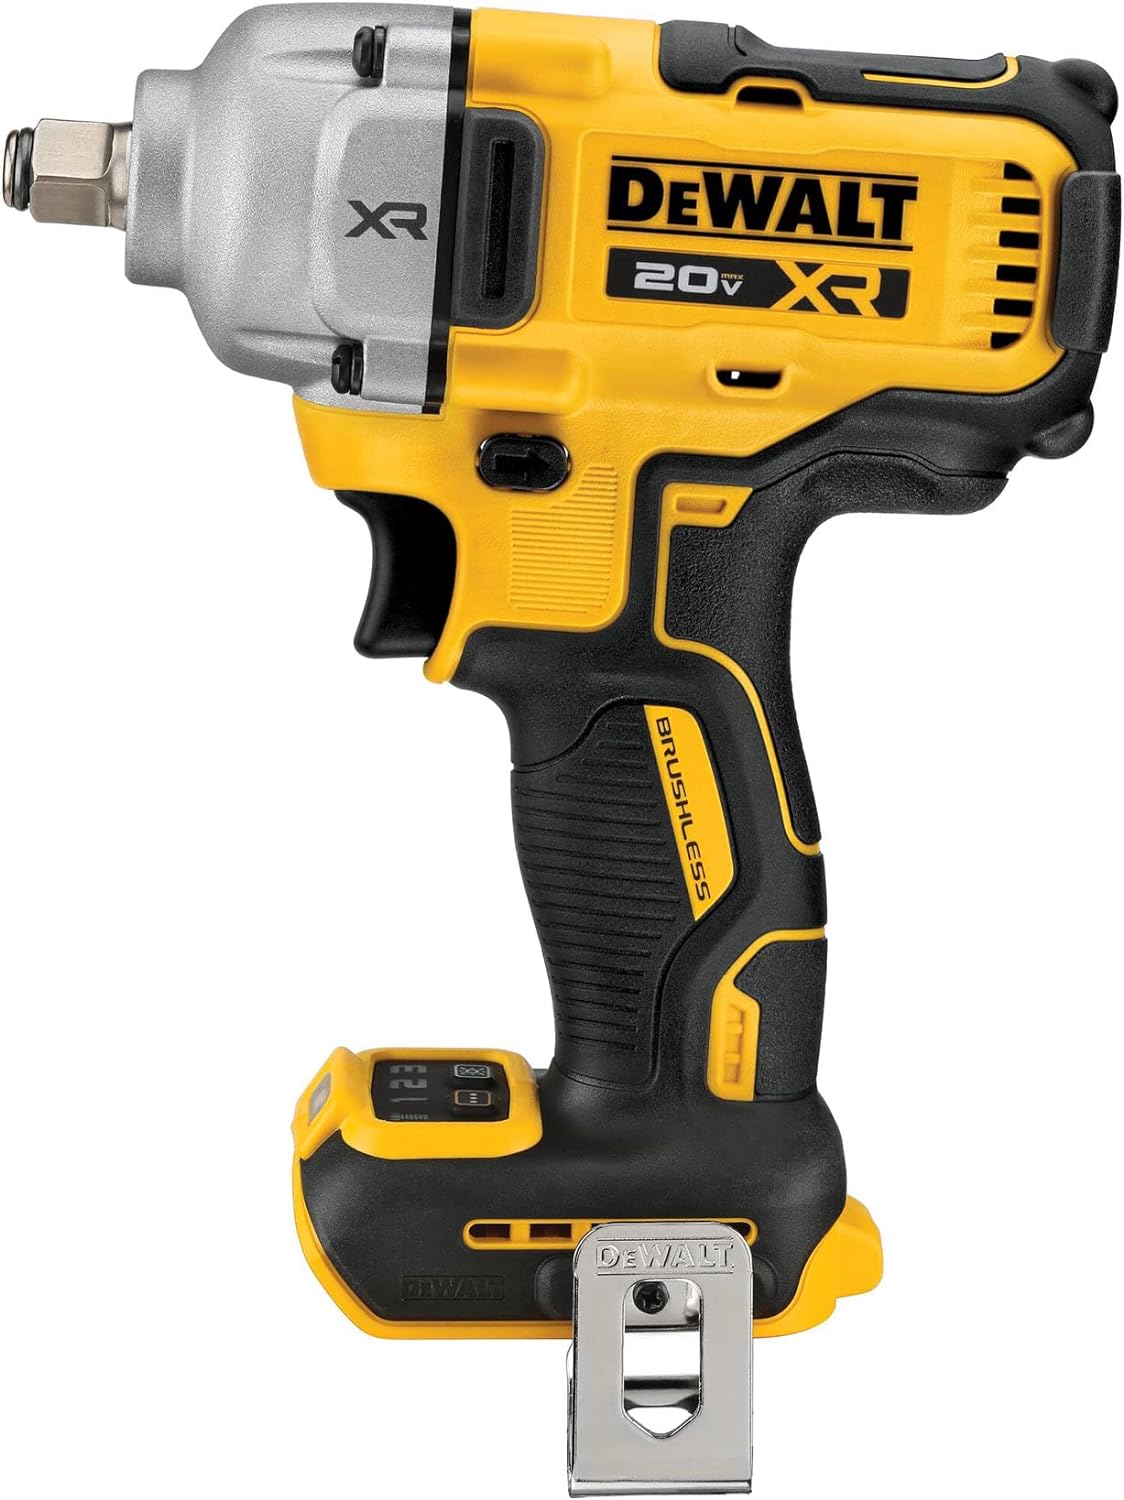 $161.78: DeWALT XR 20V Max Brushless 1/2" Drive Cordless Impact Wrench (DCF891B, Bare Tool) @ Amazon